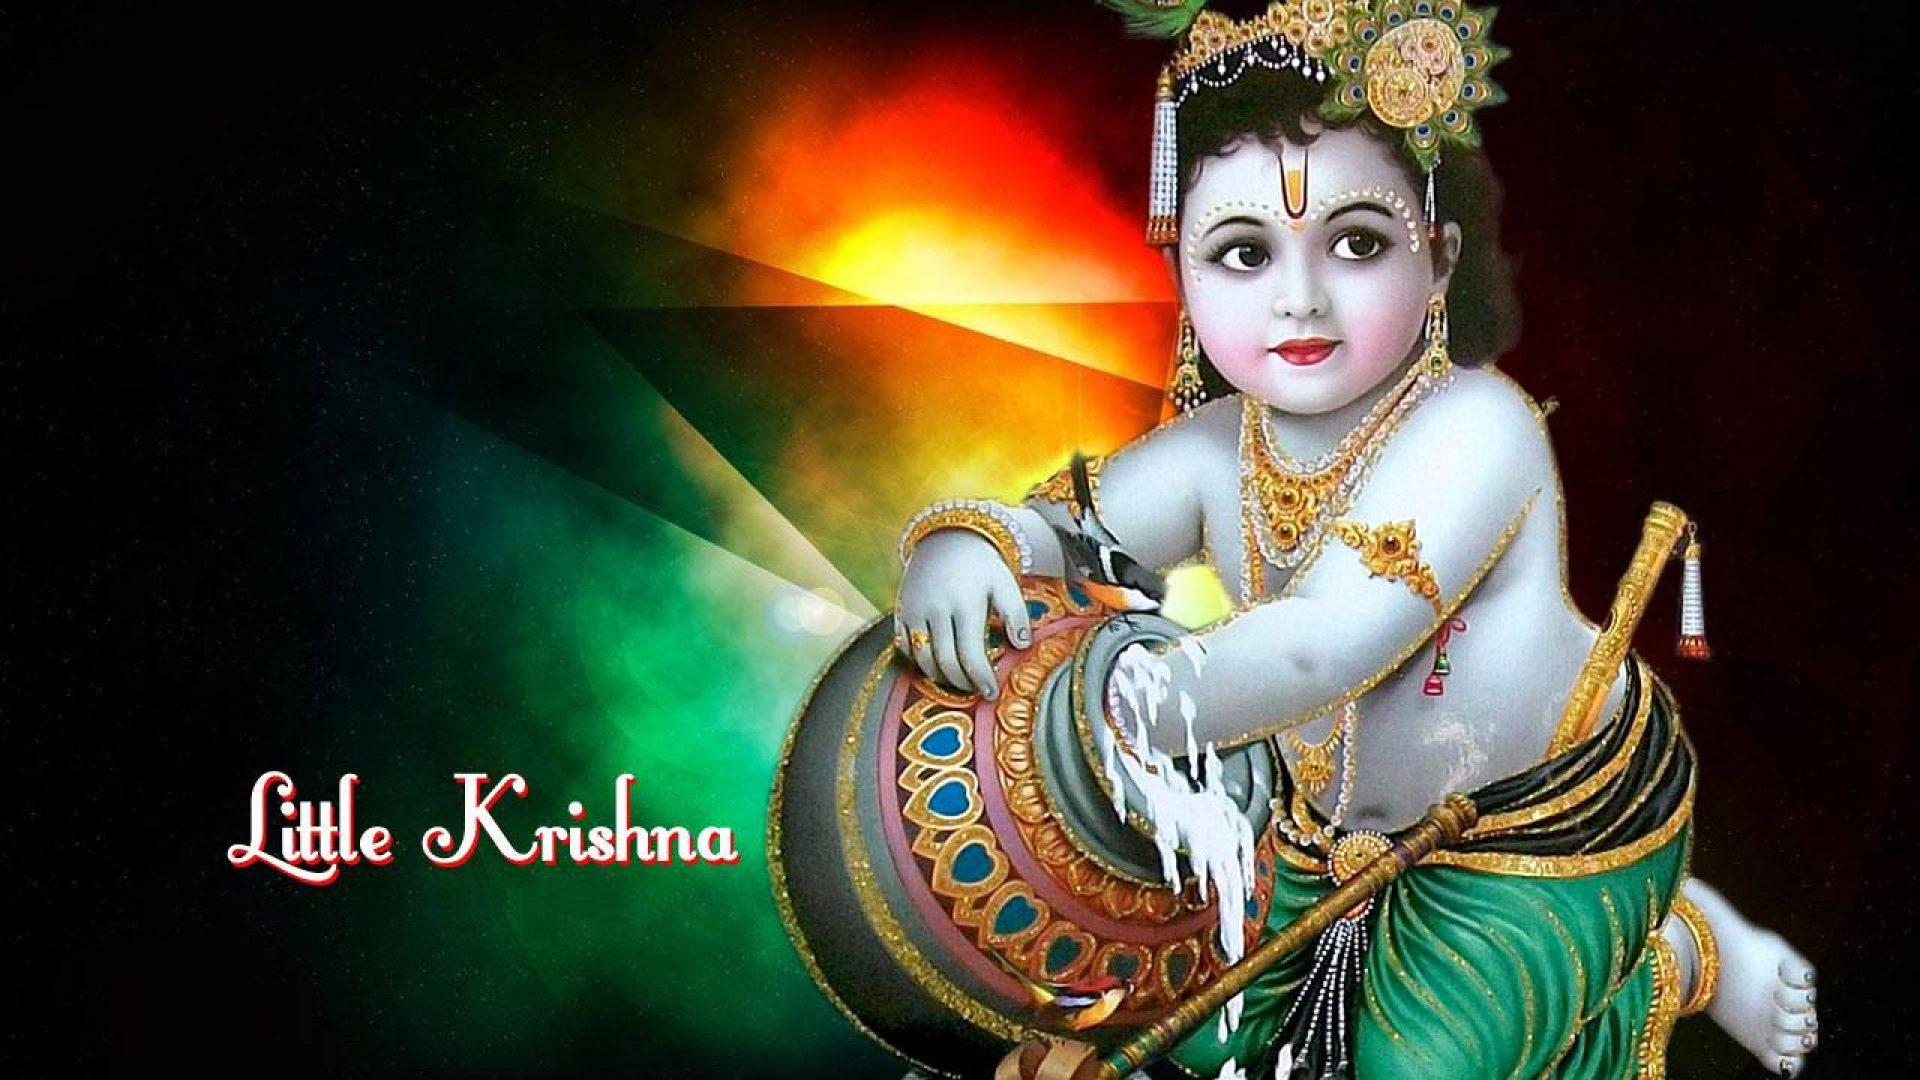 Baby Krishna Image Free Download. Hindu Gods and Goddesses